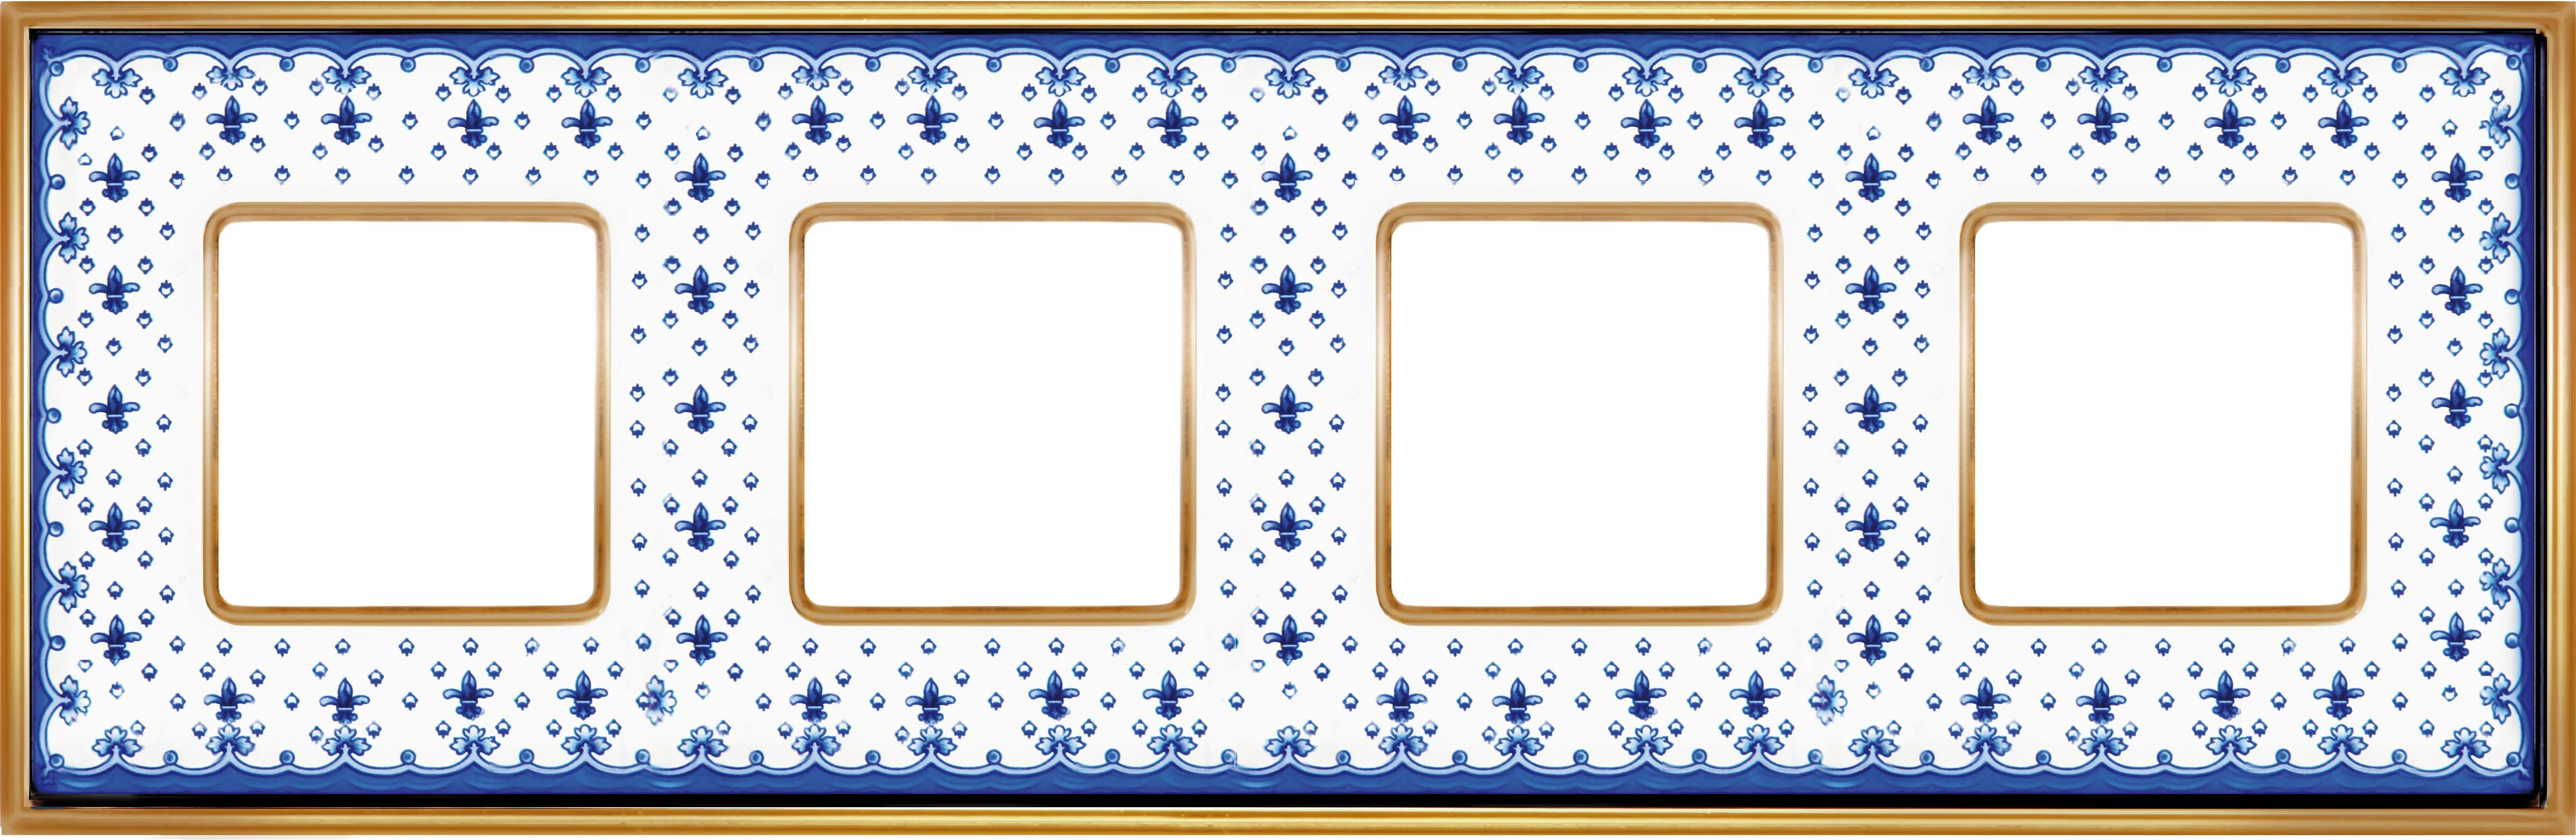  артикул FD01344AZOB название Рамка 4-ая (четверная), цвет Бело-синий фарфор/Светлое золото, VINTAGE PORCELAIN, Fede